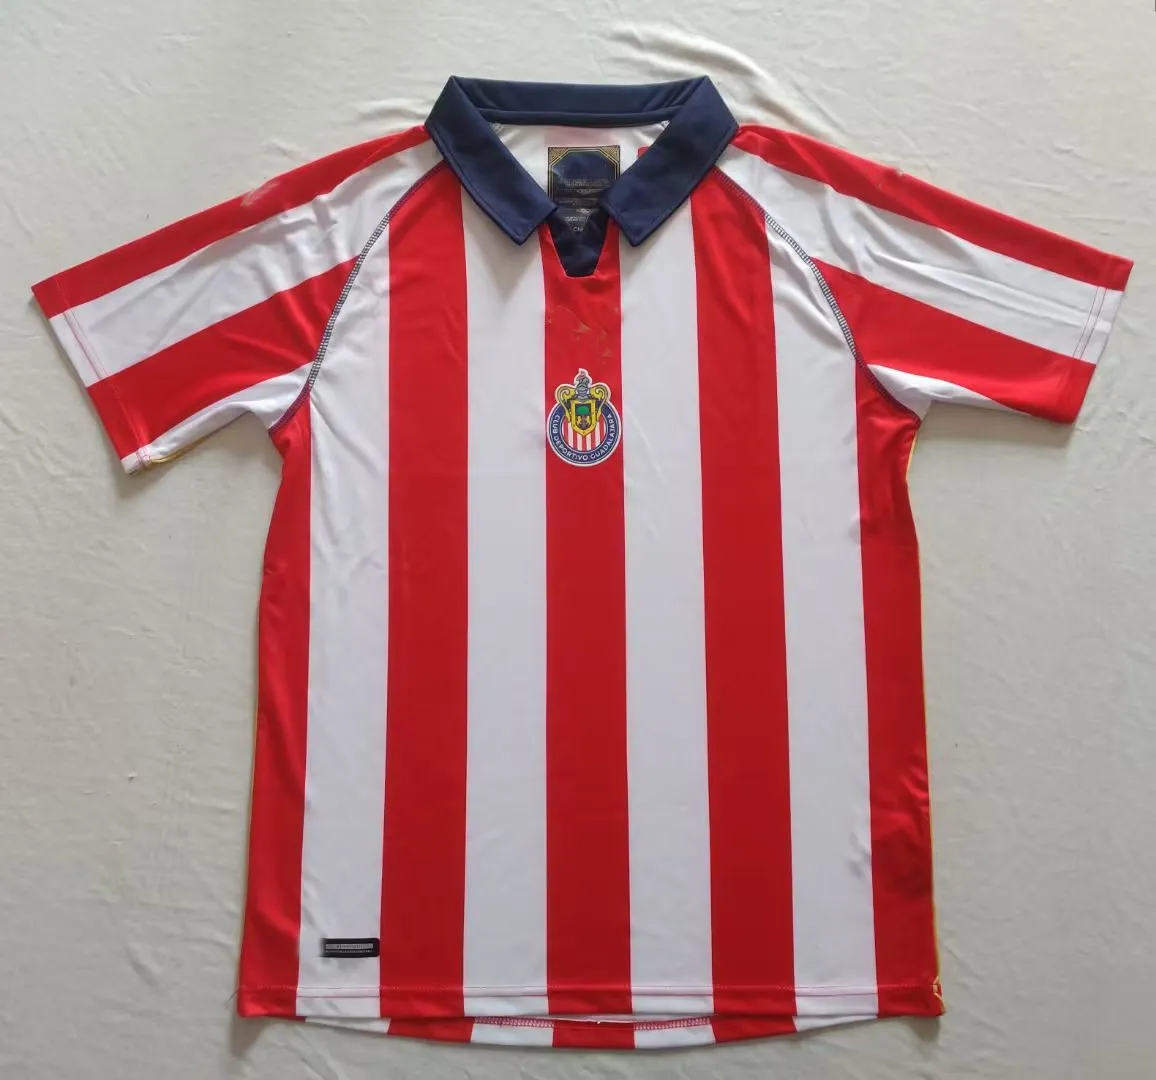 Chivas記念版サッカージャージーグアダラハラメンズホームアウェイ